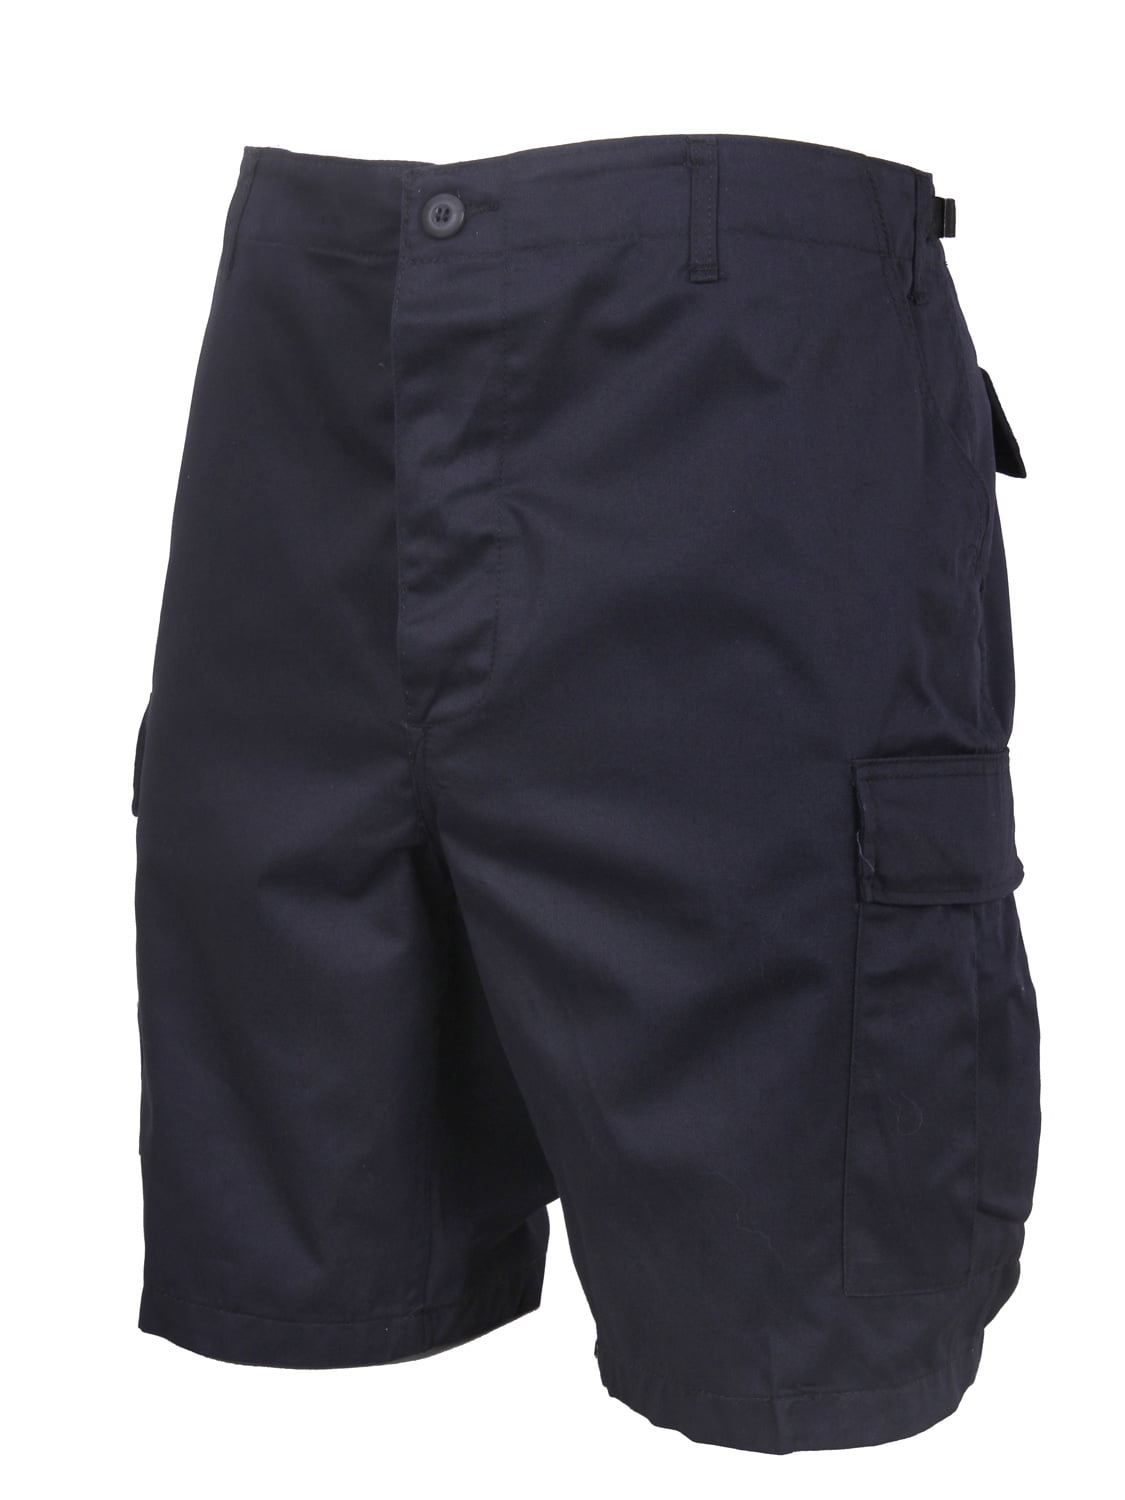 Rothco - Rothco Men's Tactical Solid BDU Combat Shorts - Midnight Navy ...